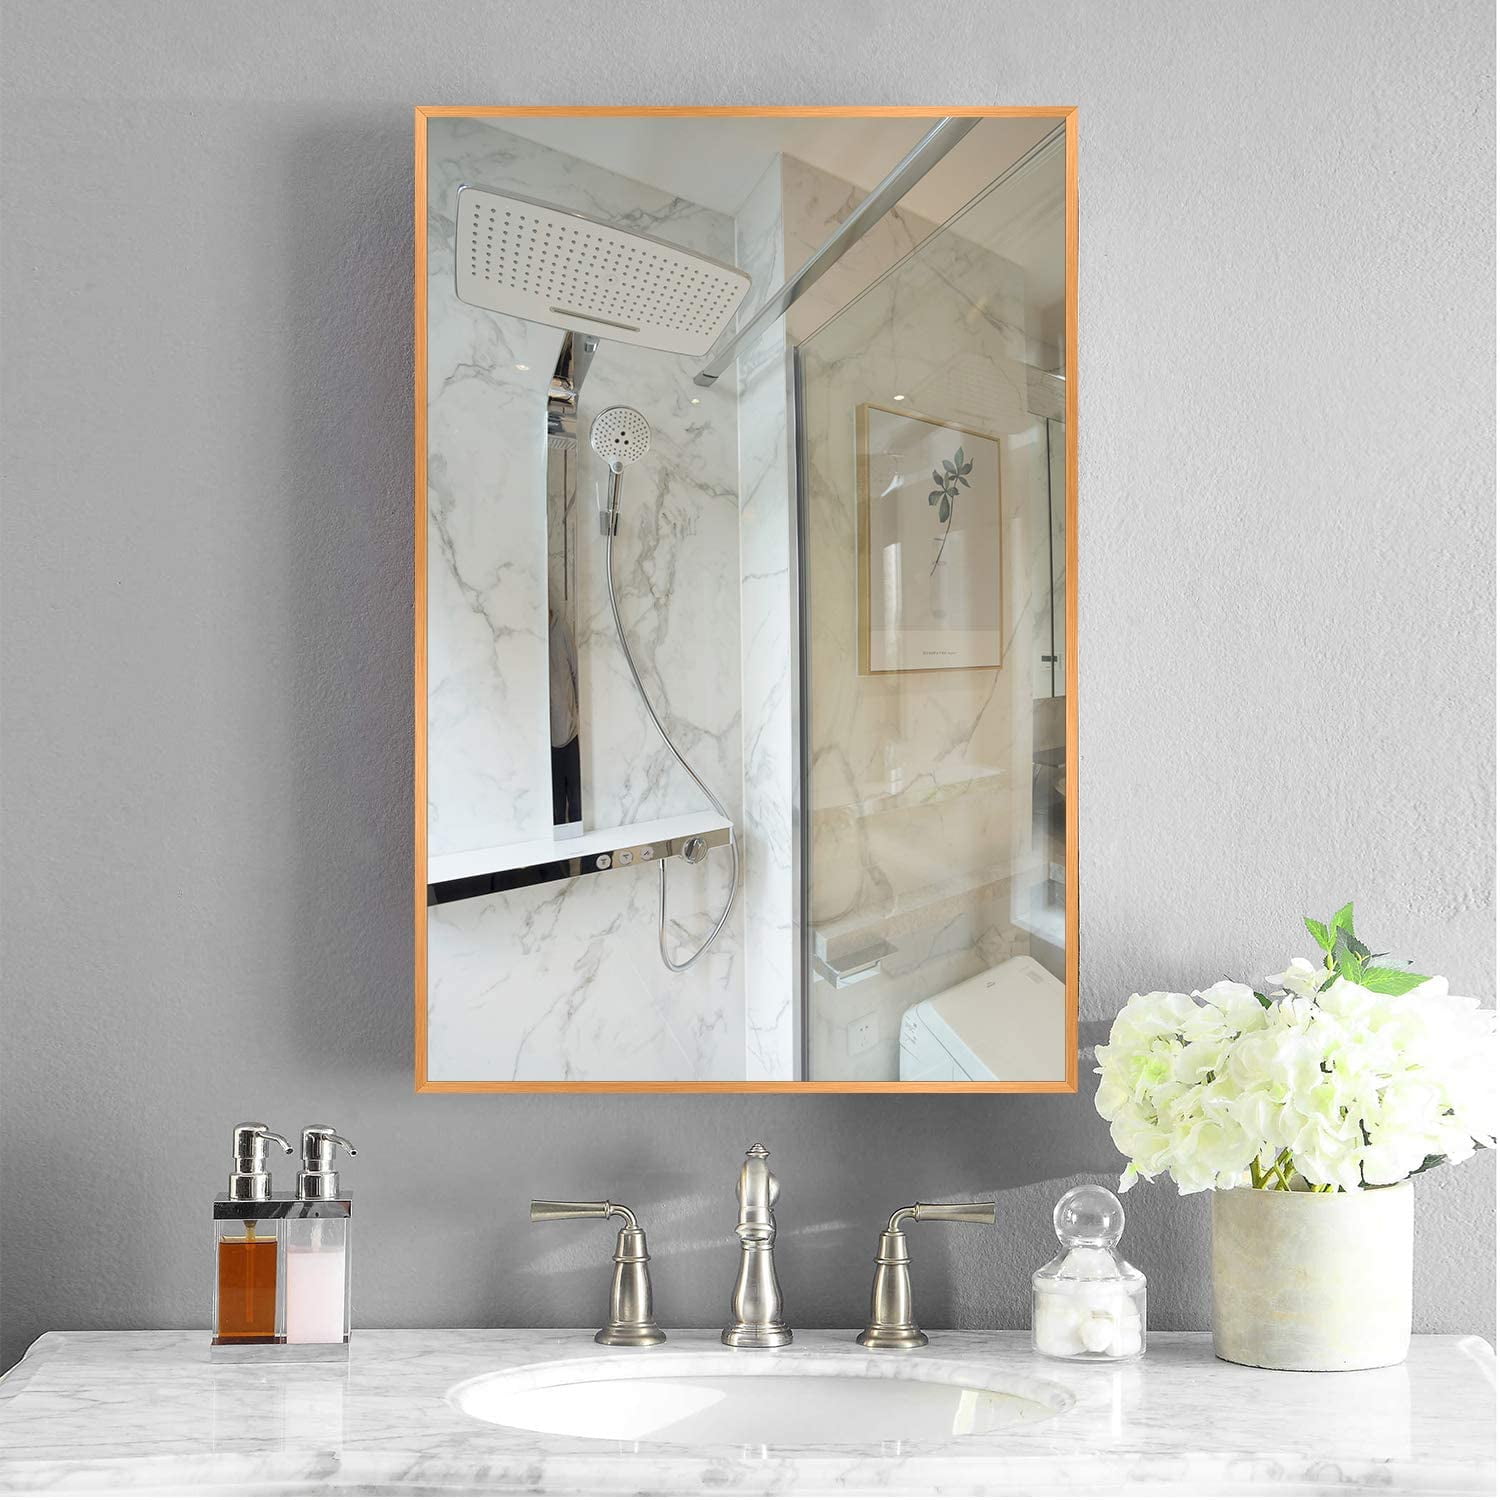 Decorative bathroom mirrors